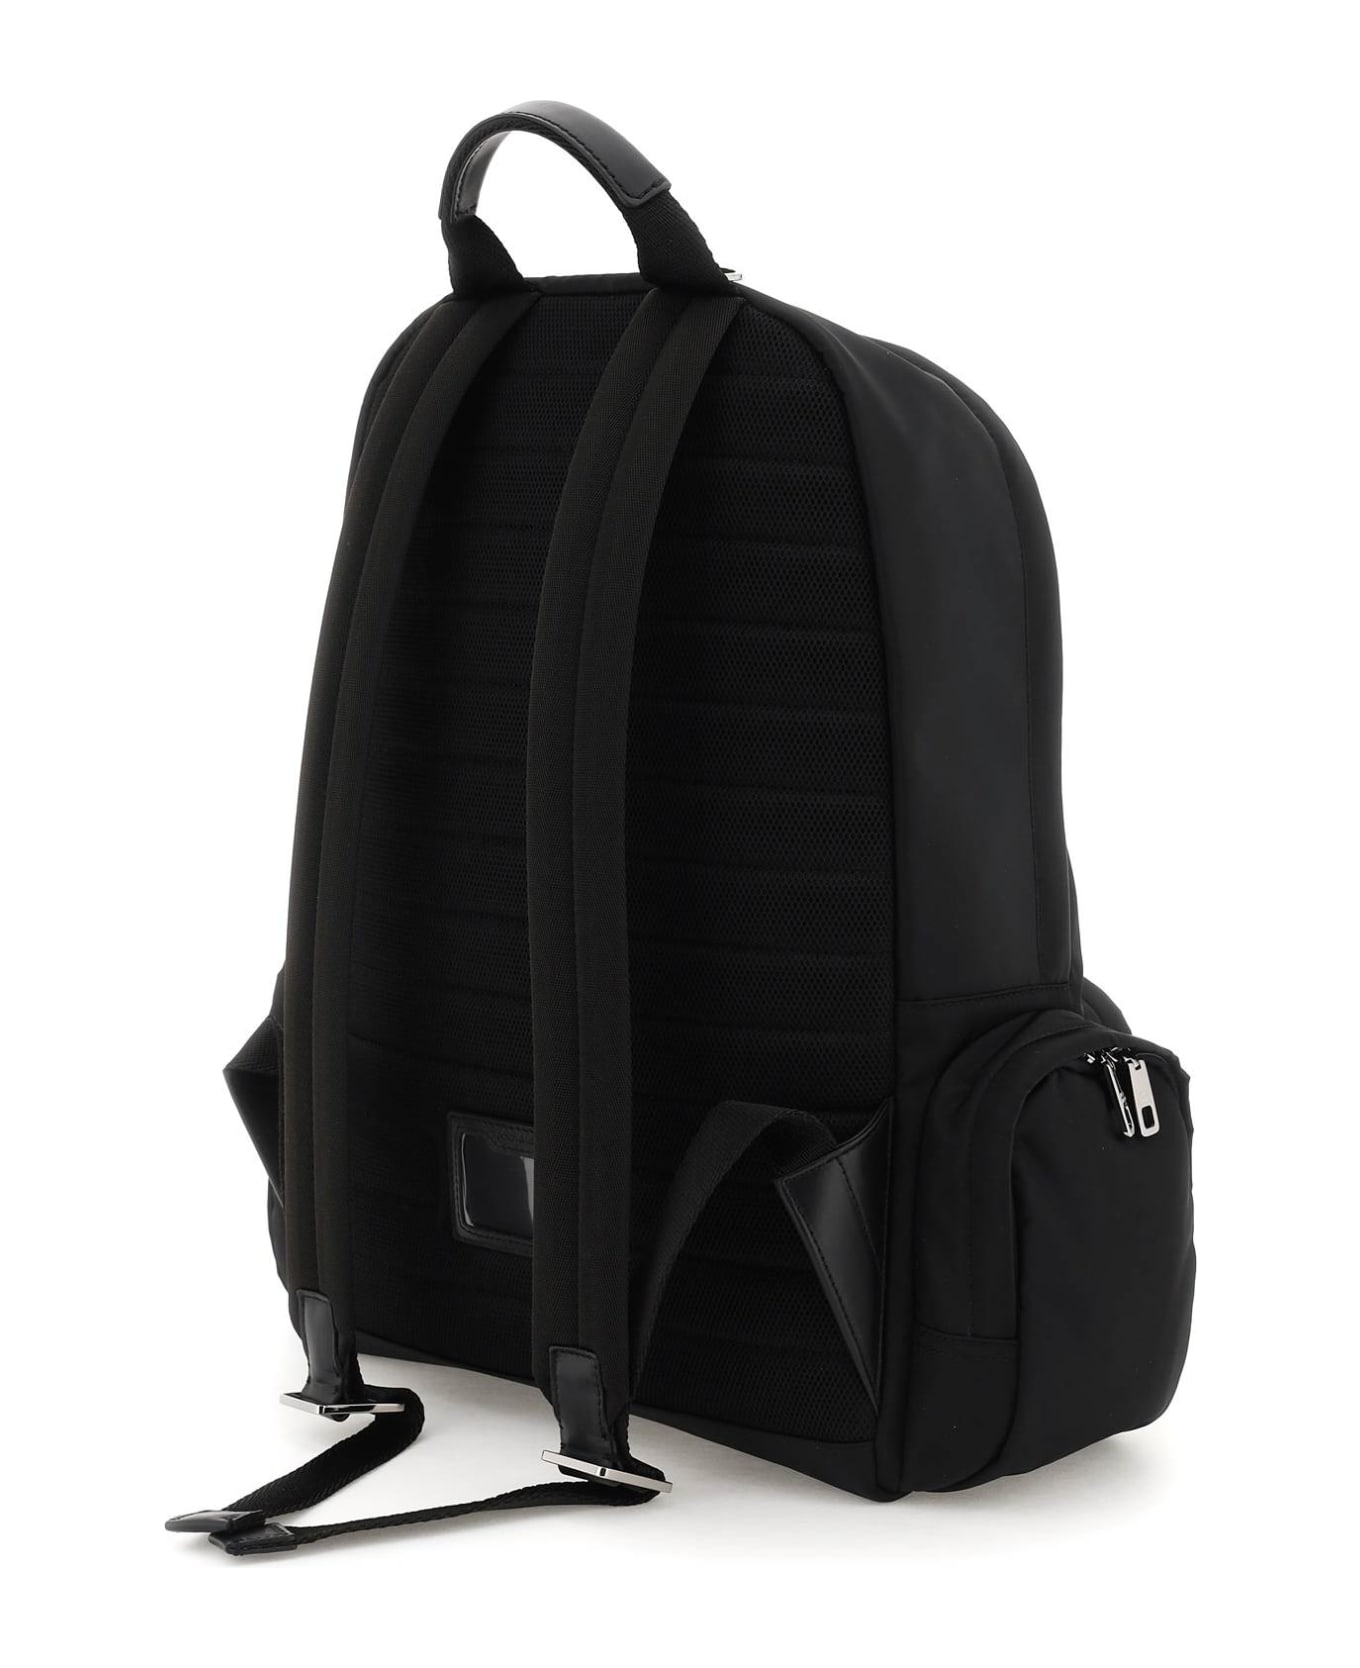 Dolce & Gabbana Nylon Backpack With Logo - Nero/nero